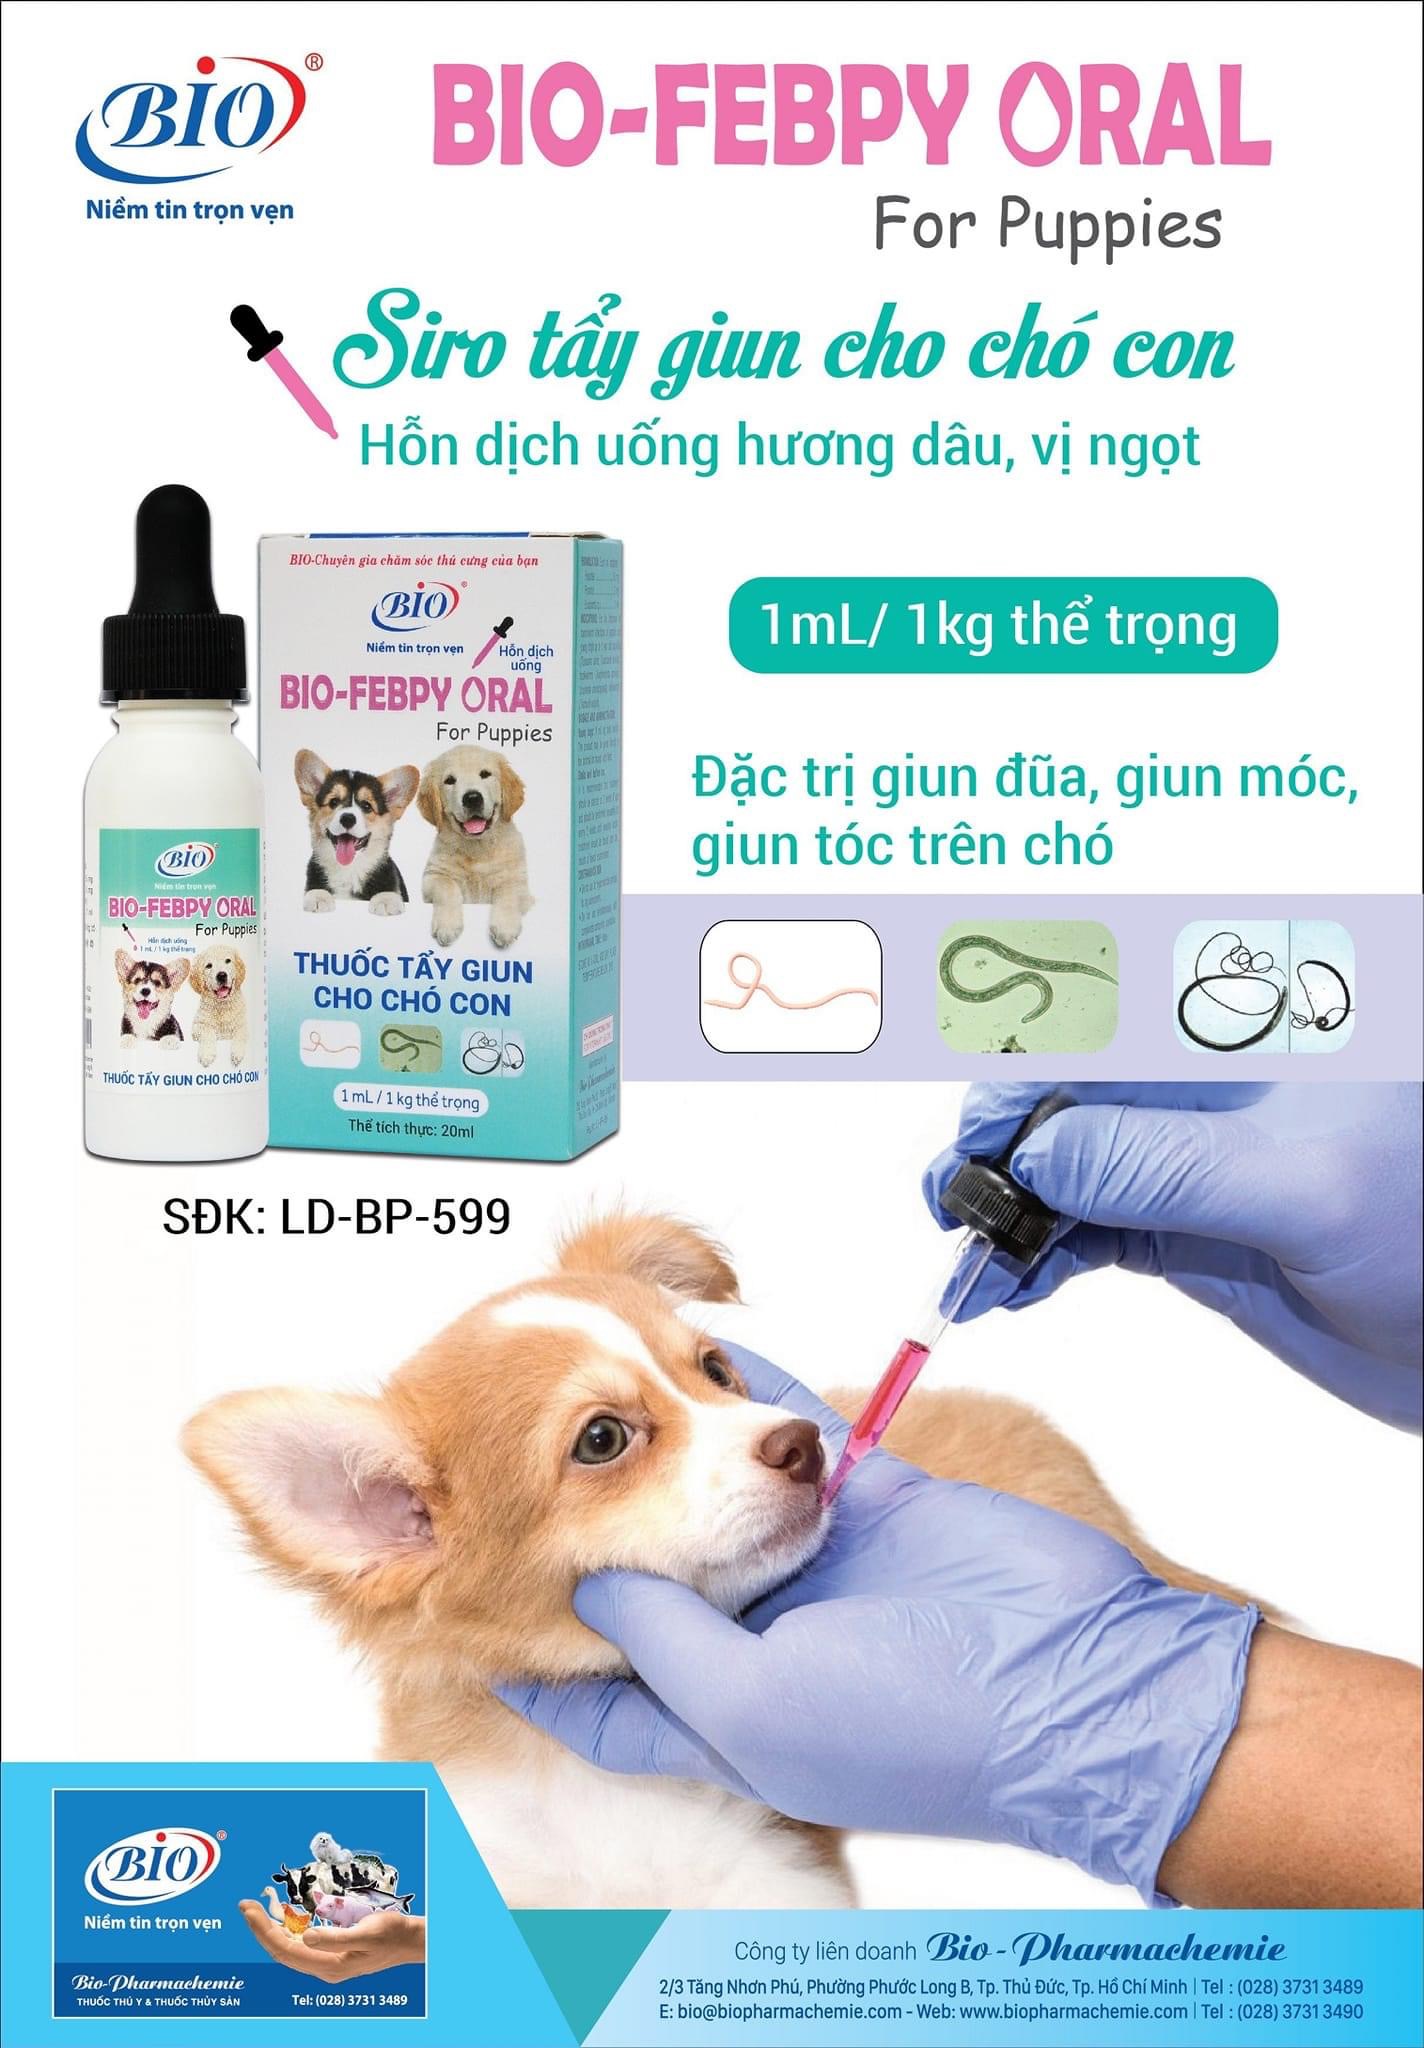 Bio Febpy Oral uống xổ giun trên chó con